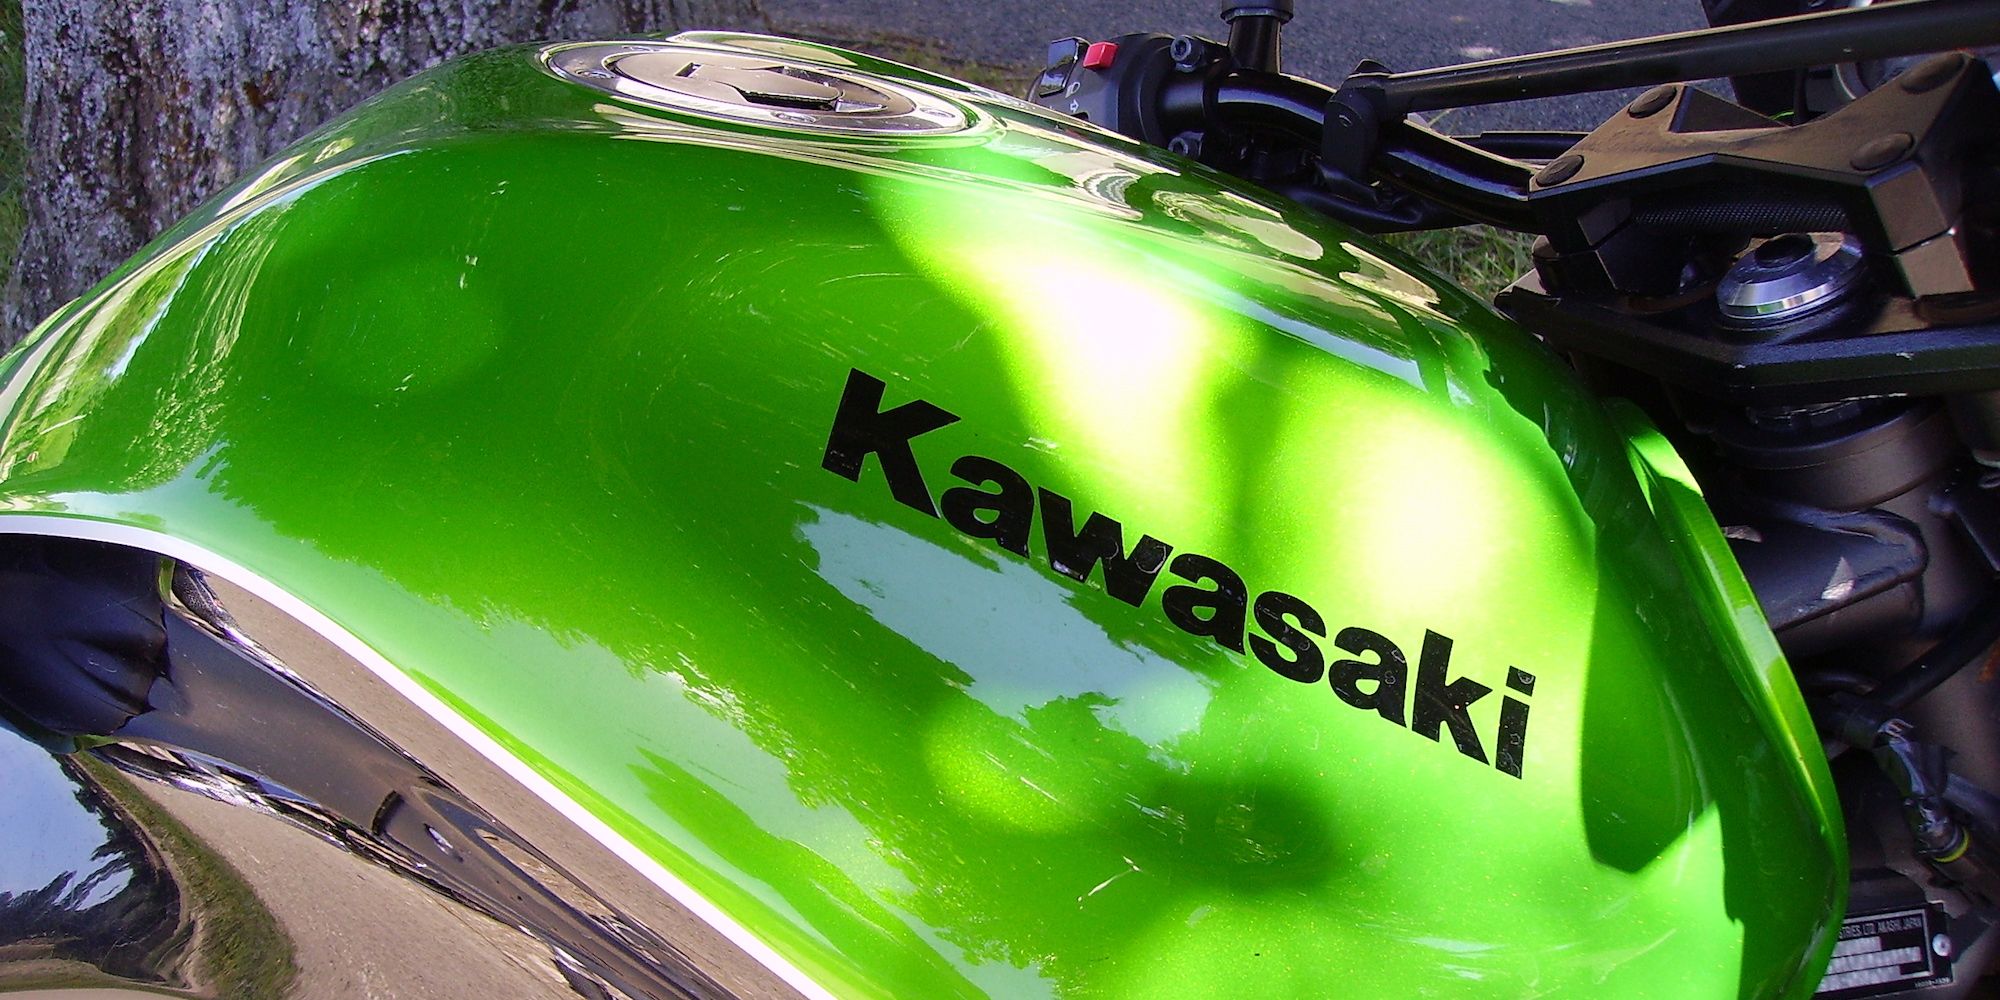 2009 Kawasaki Z750 fuel tank